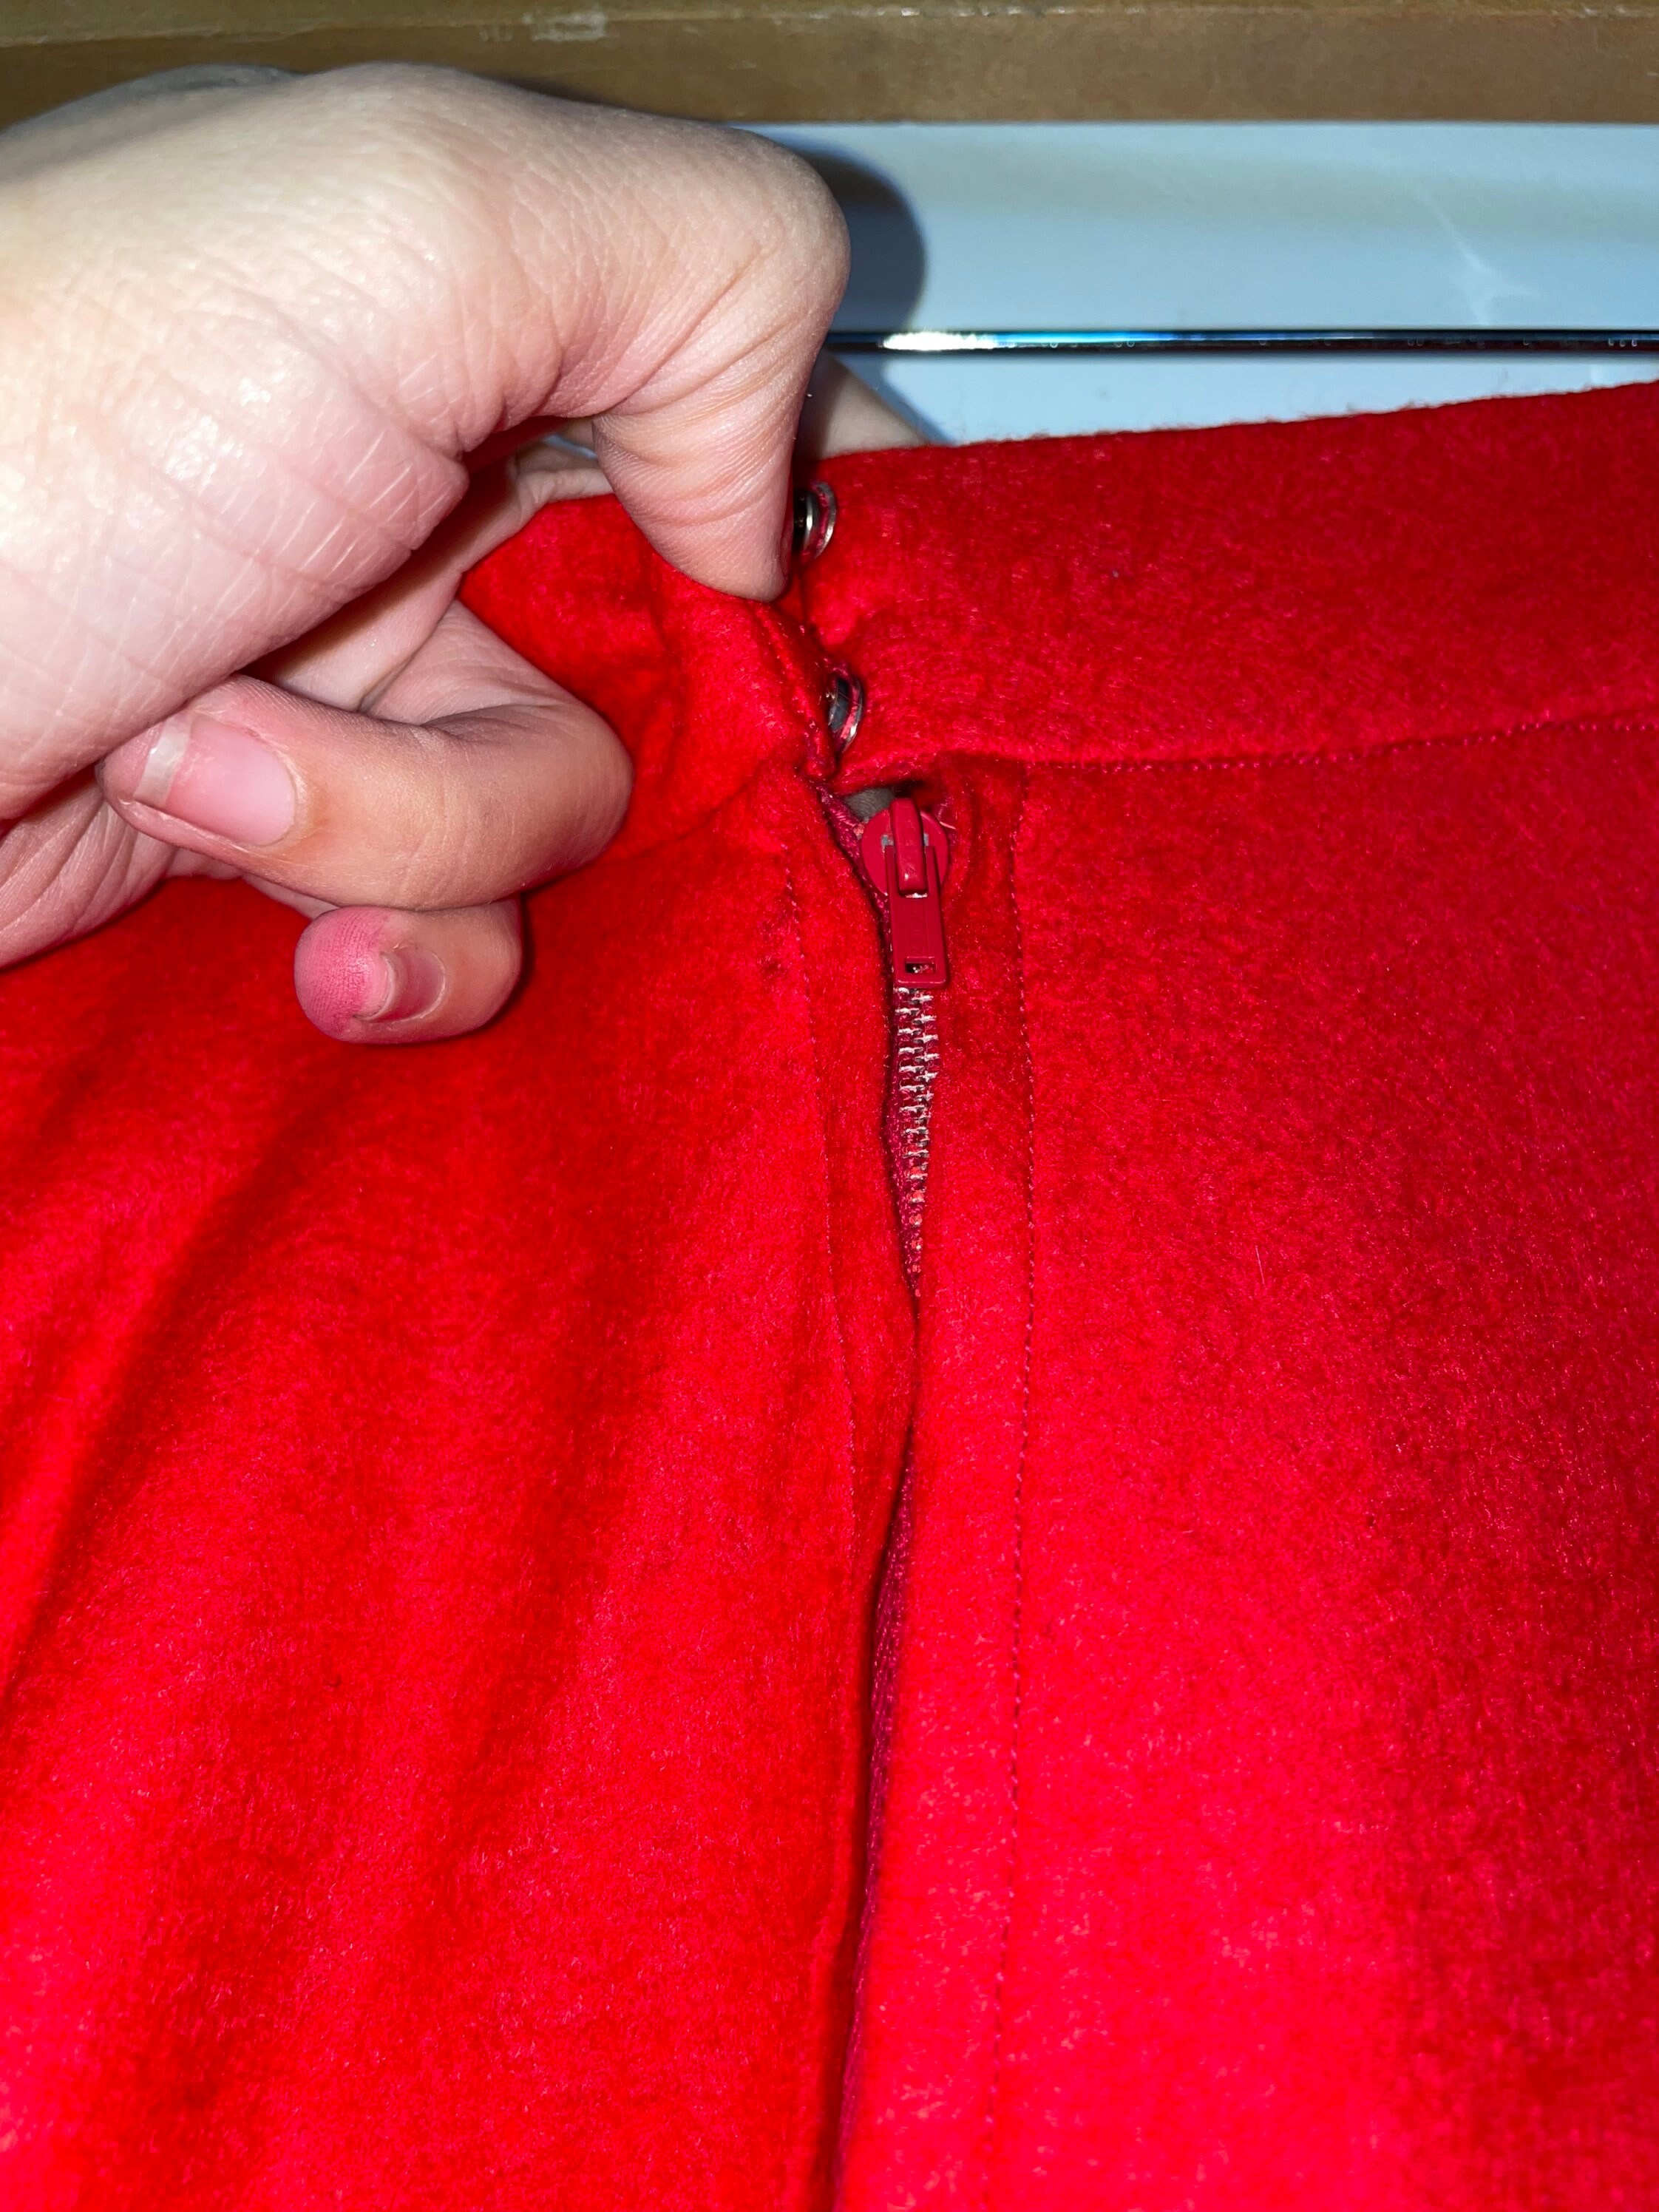 1950s Bright Red Wool Felt Circle Skirt - Etsy